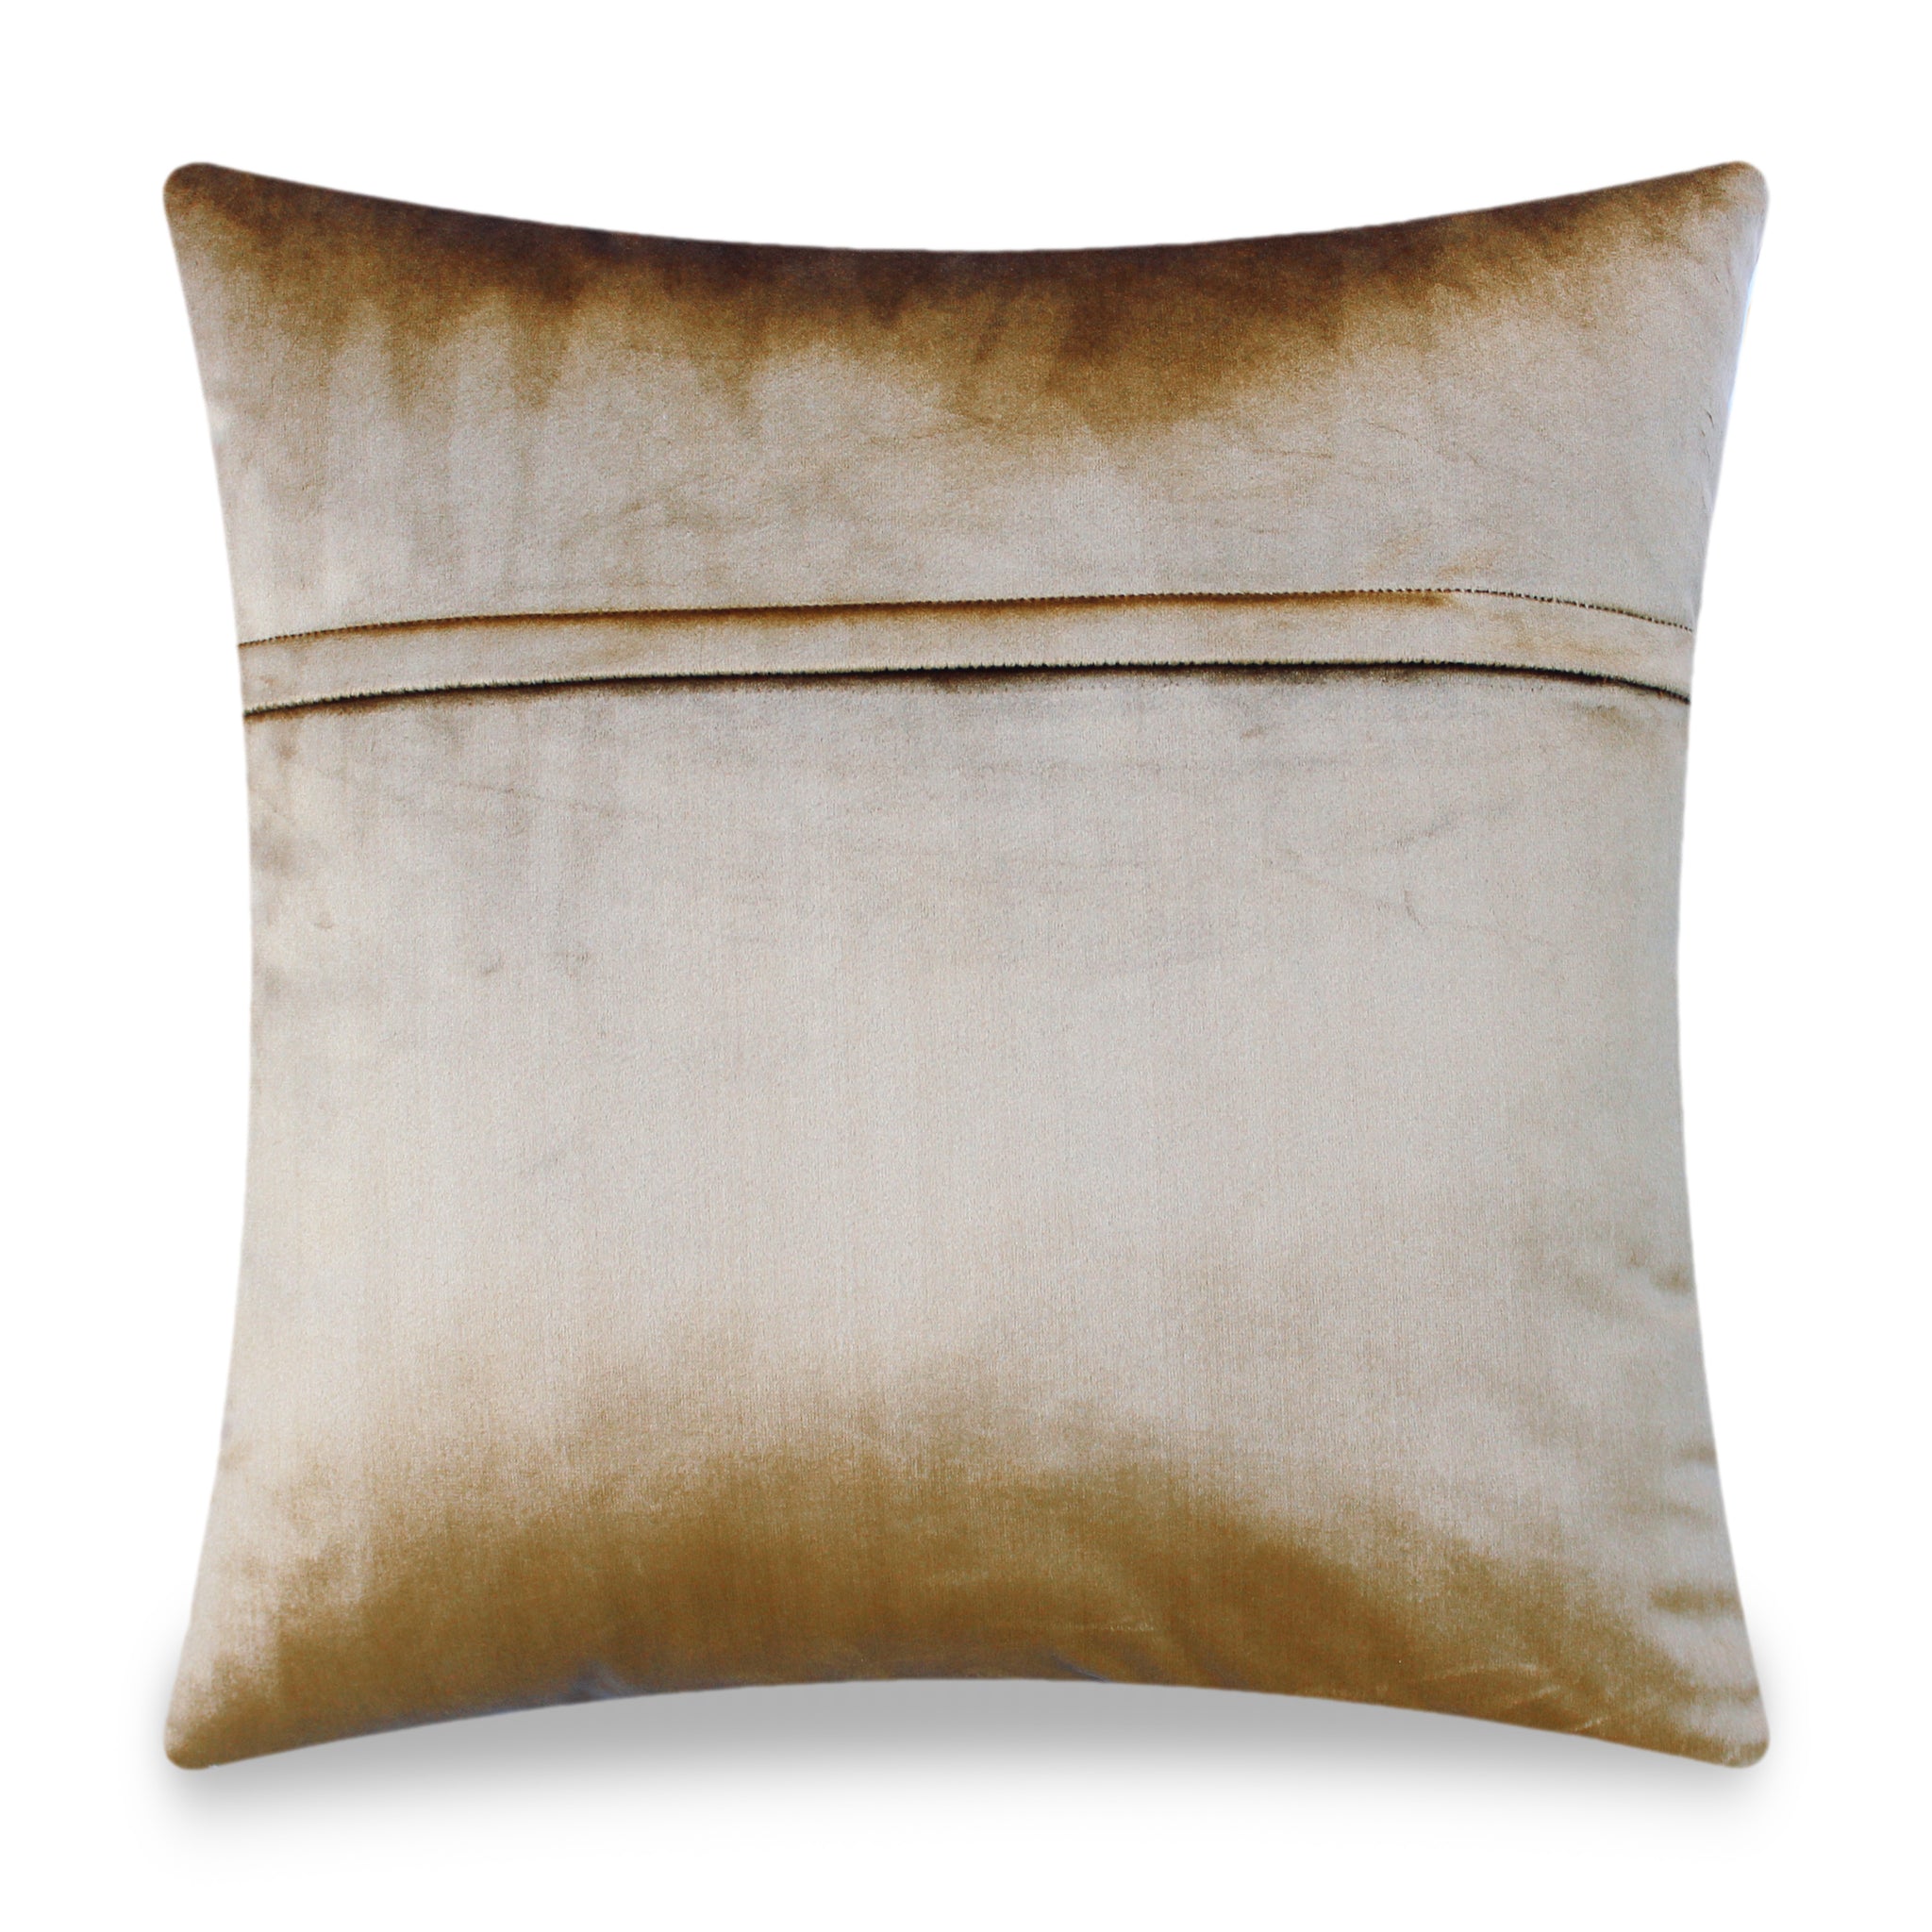 Golden Velvet Cushion Cover, Hermes Inspired Horse Printed Decorative Pillow, Vintage Home Décor Throw Pillow Cover,  45 x 45 CM